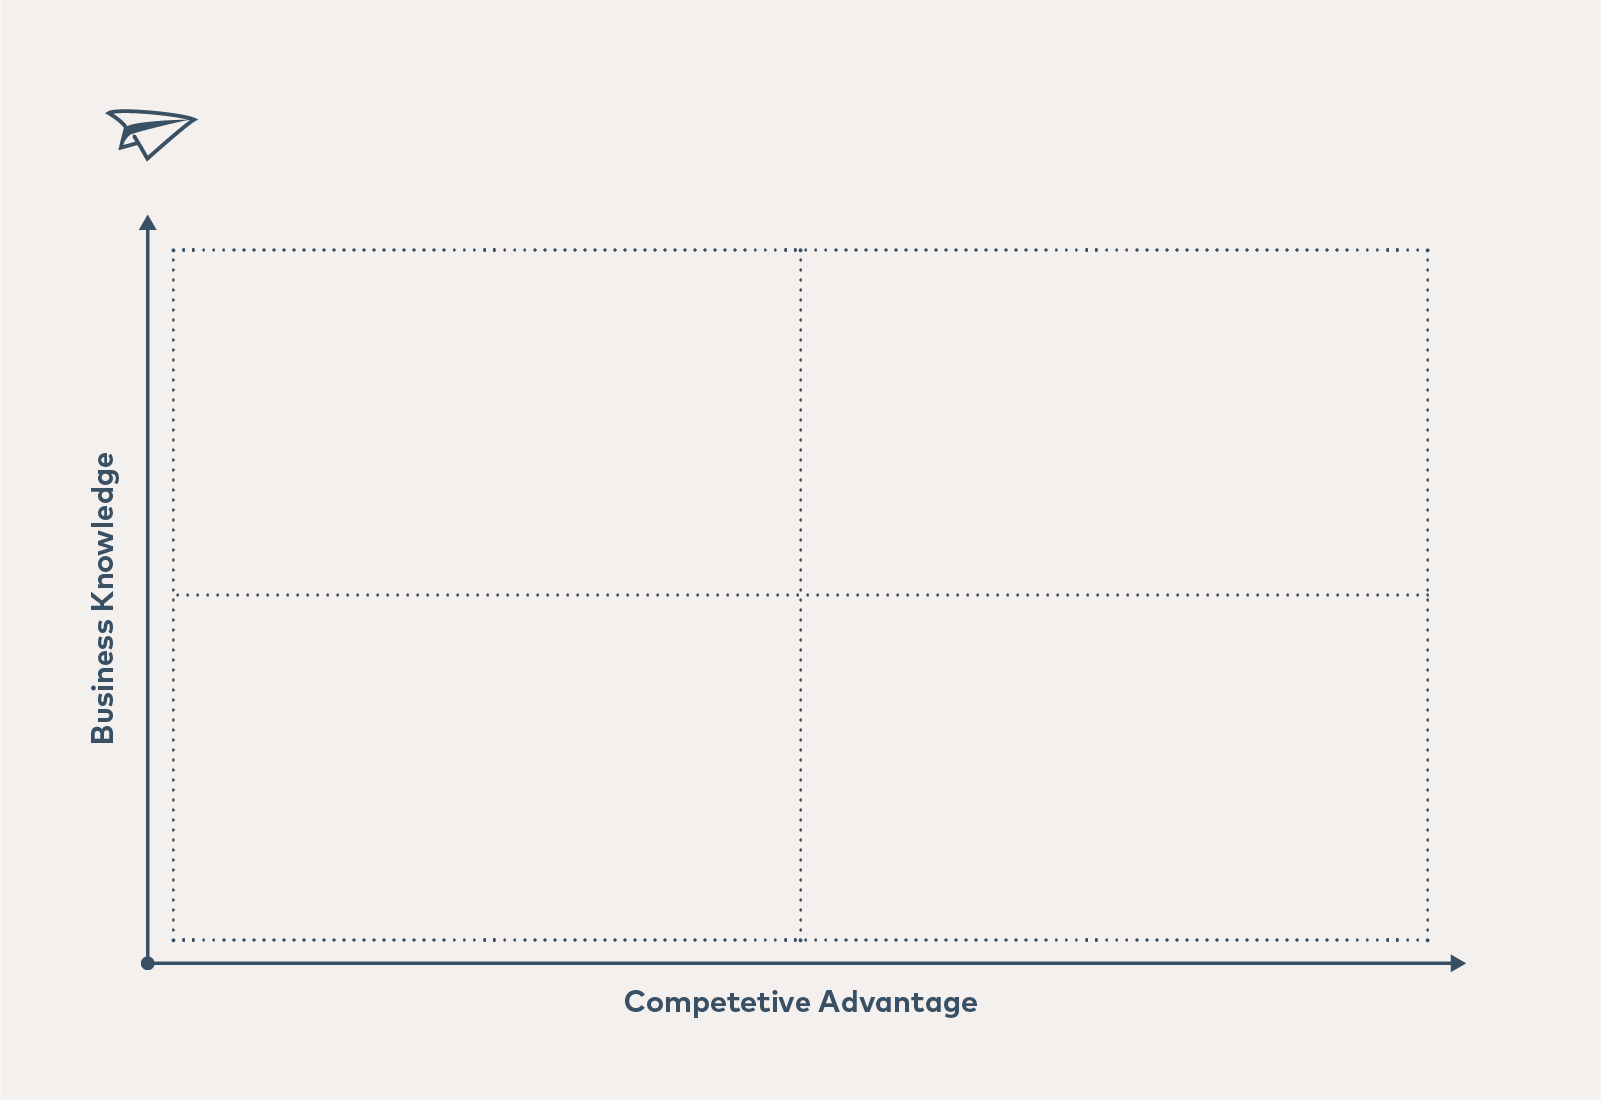 Graph of Business Knowledge vs Competitive Advantage